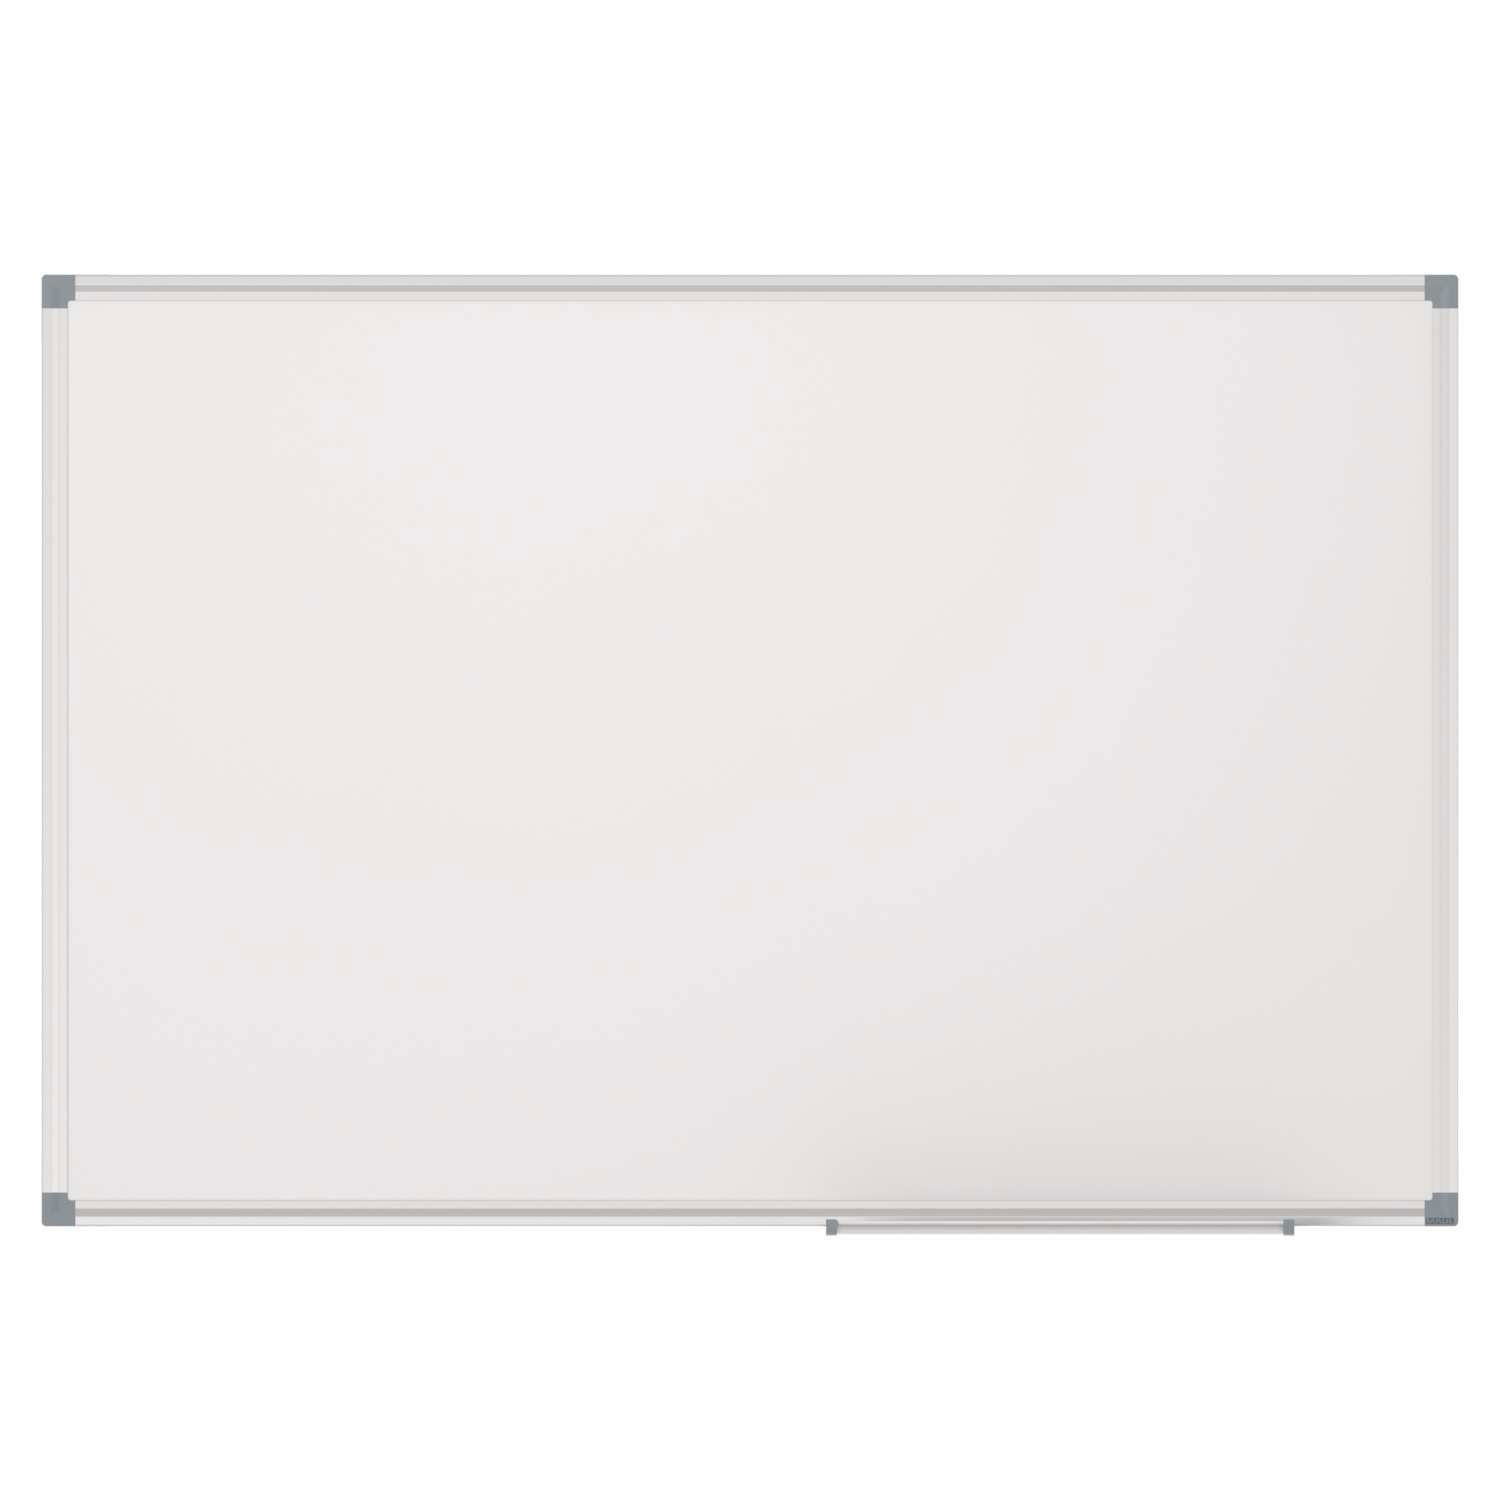 Whiteboard MAULstandard, 120x150 cm